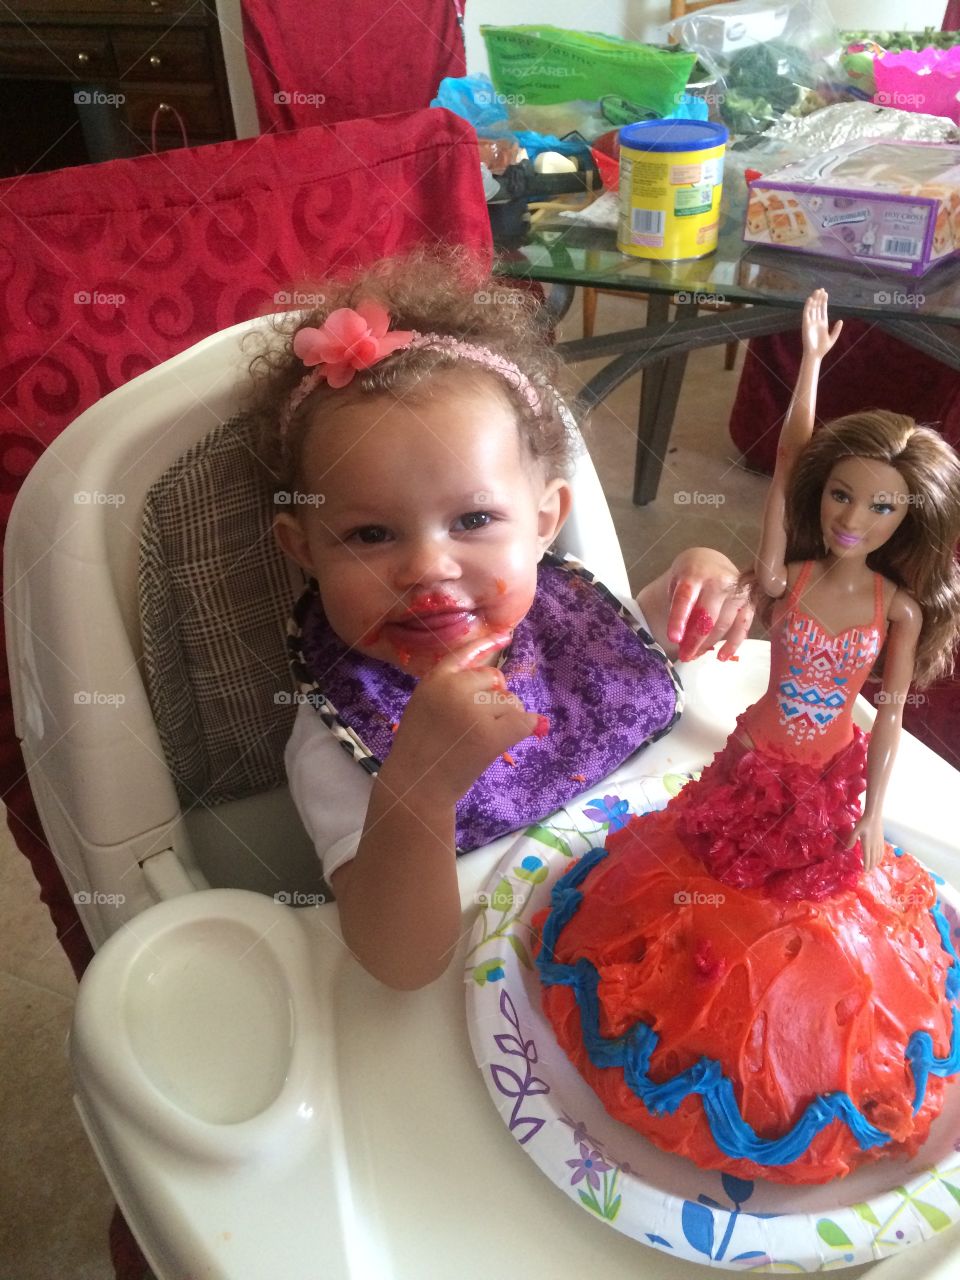 Baby enjoying birthday cake 